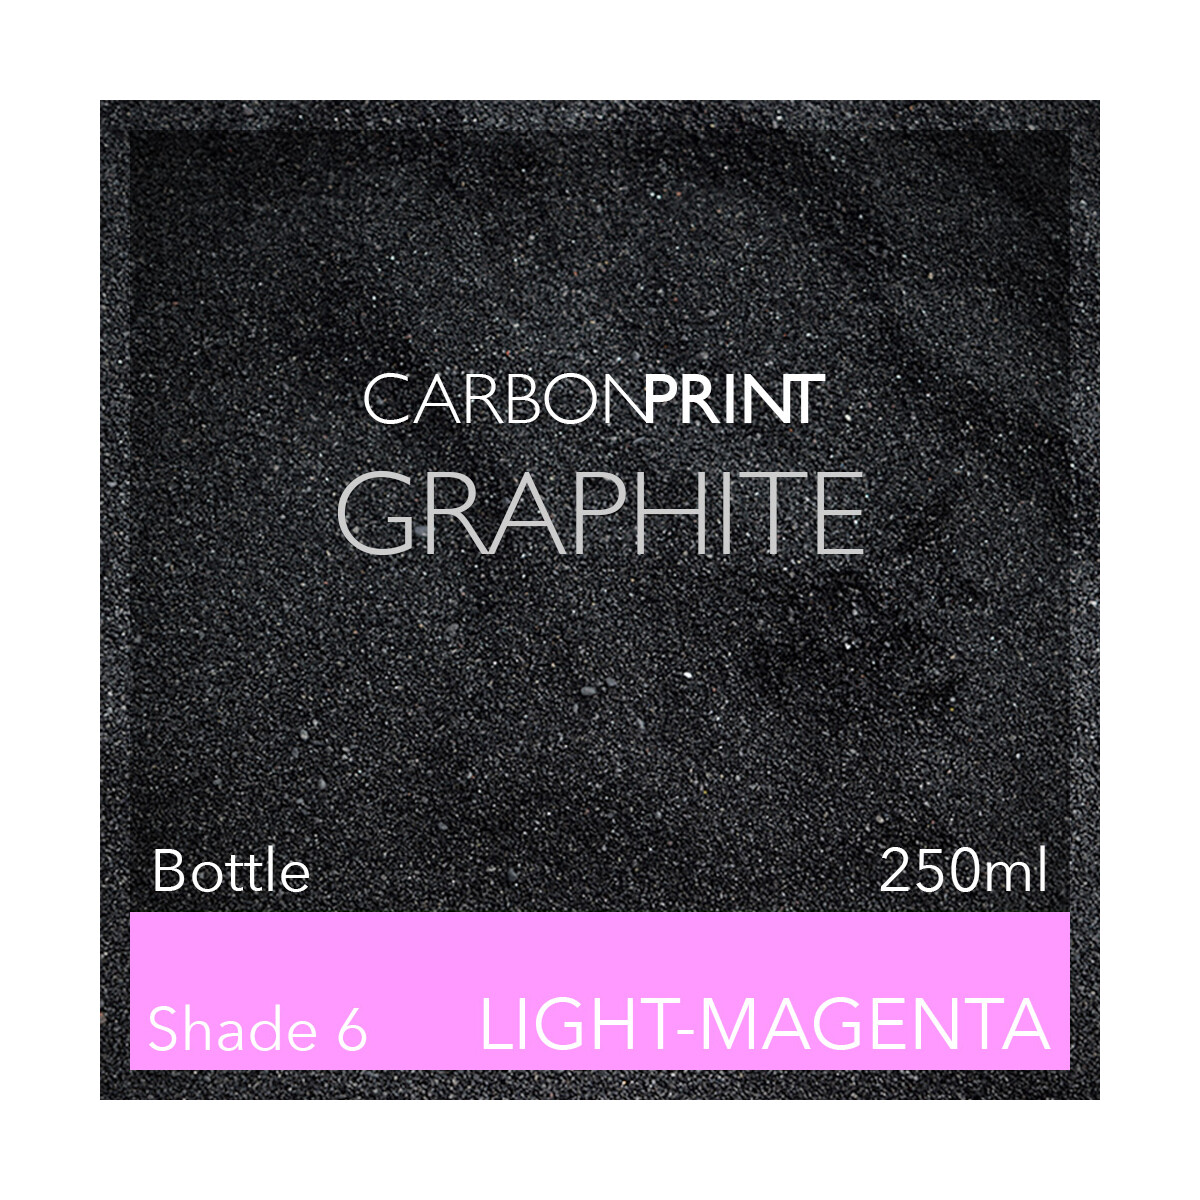 Carbonprint Graphite Shade6 Kanal LM 250ml Neutral